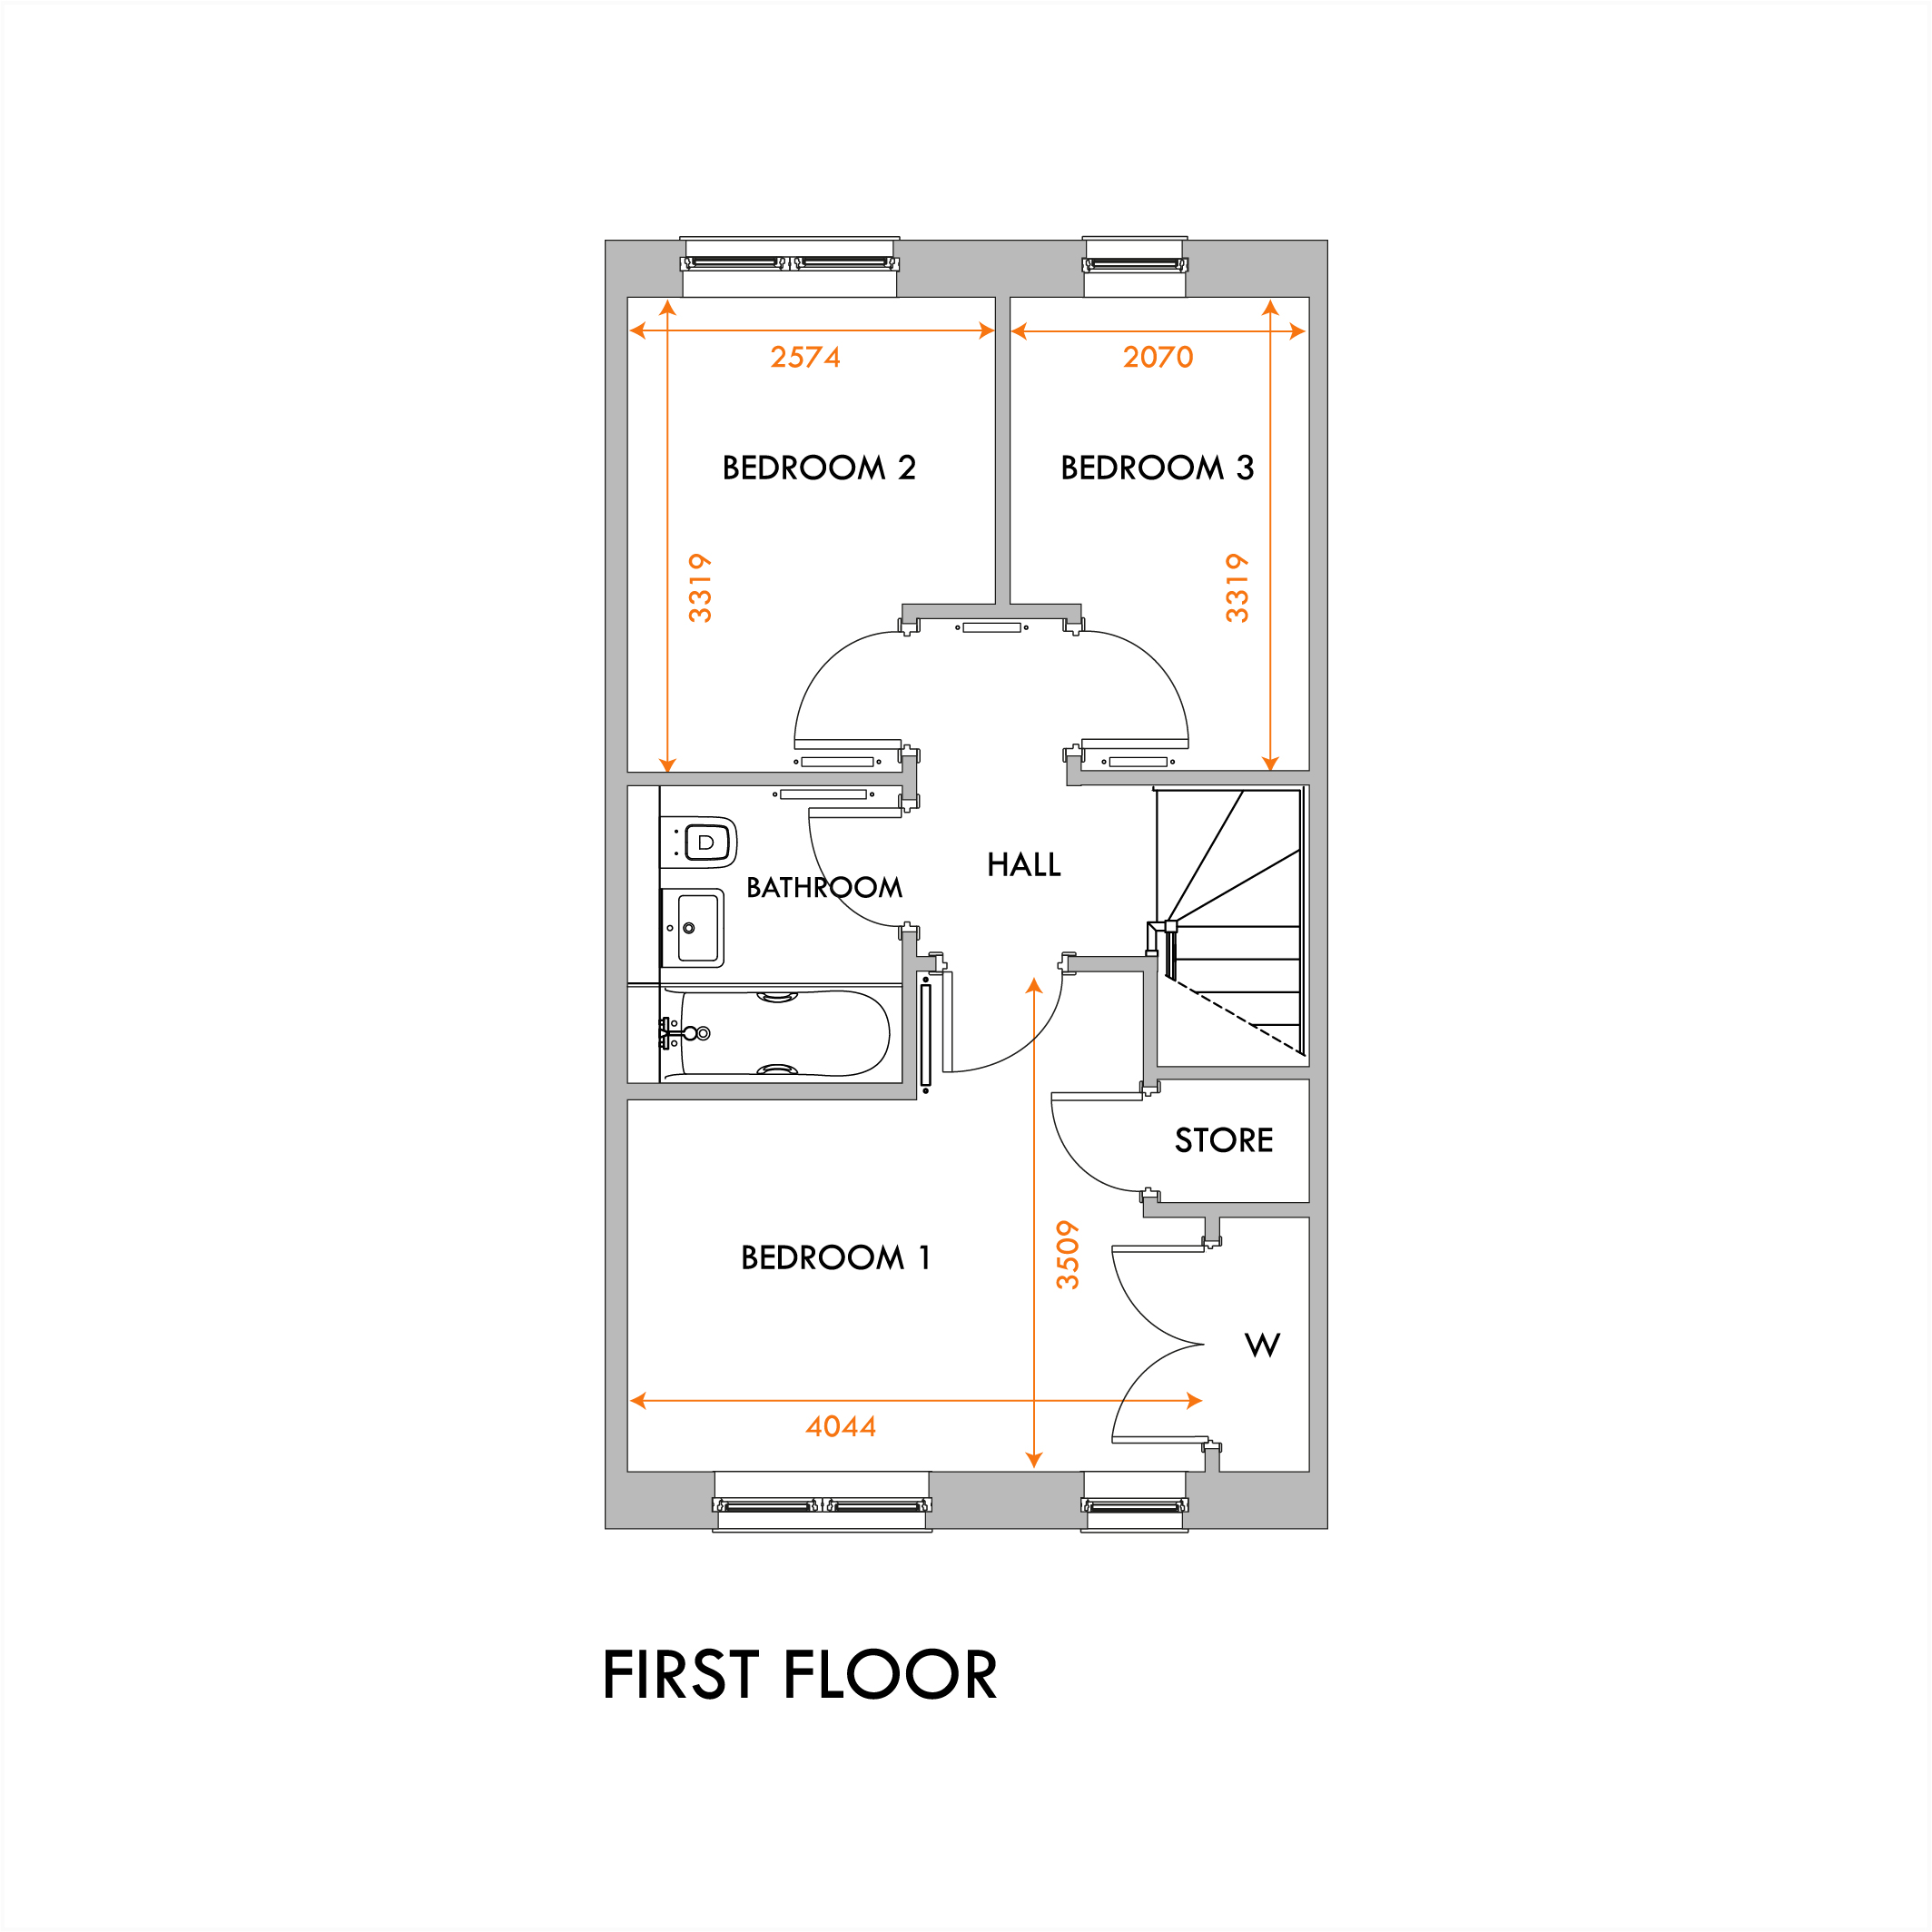 Borthwick first floor plan